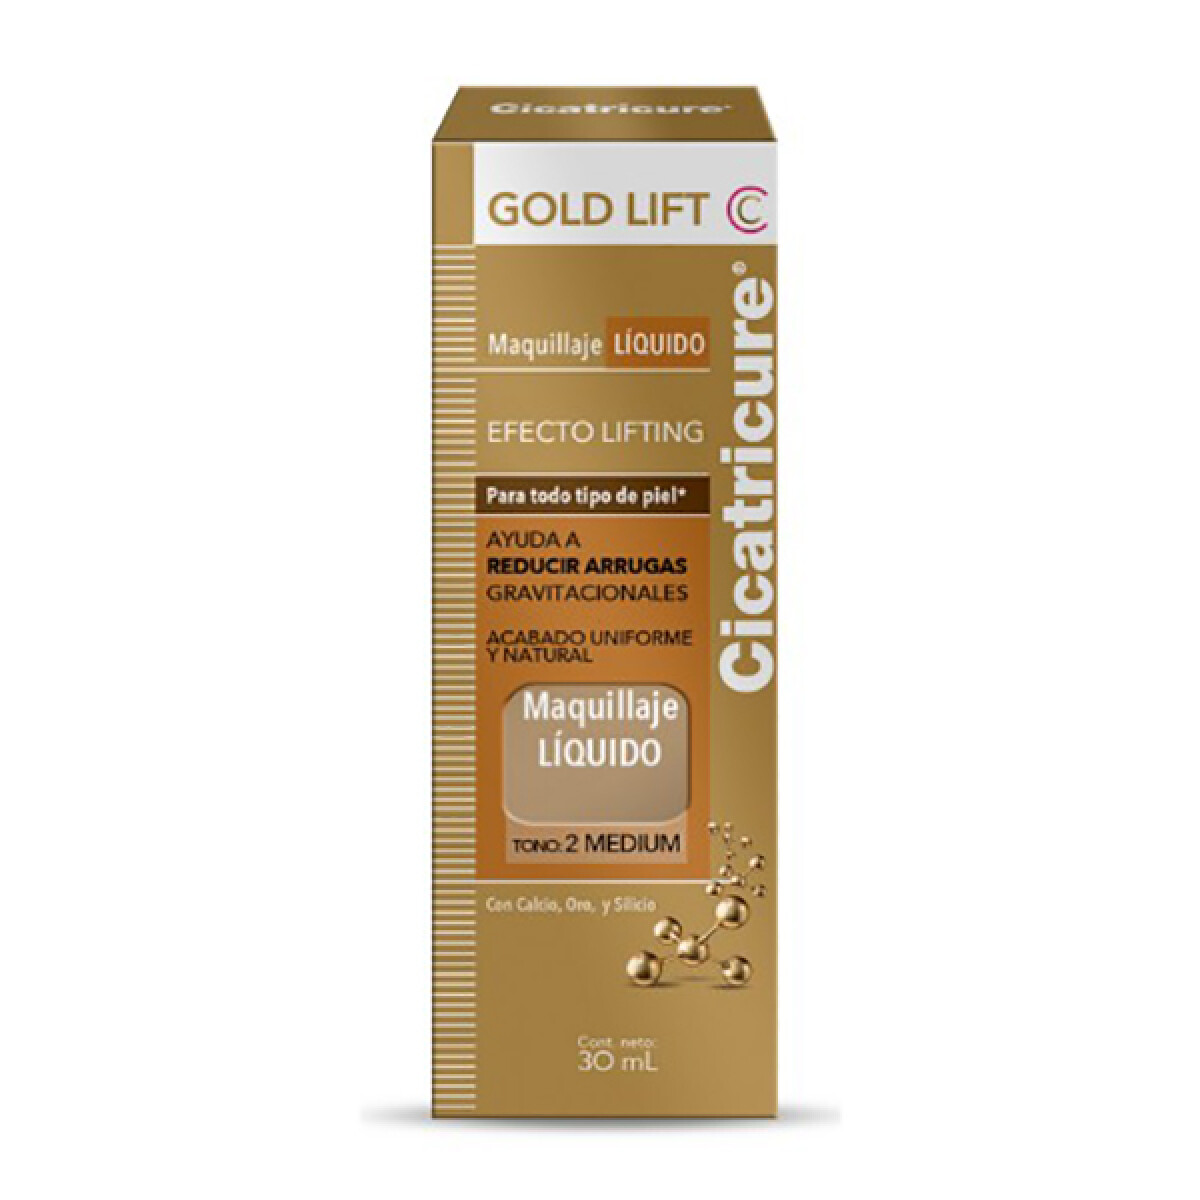 Maquillaje líquido Gold Lift Cicatricure - Tono 2 Medium 